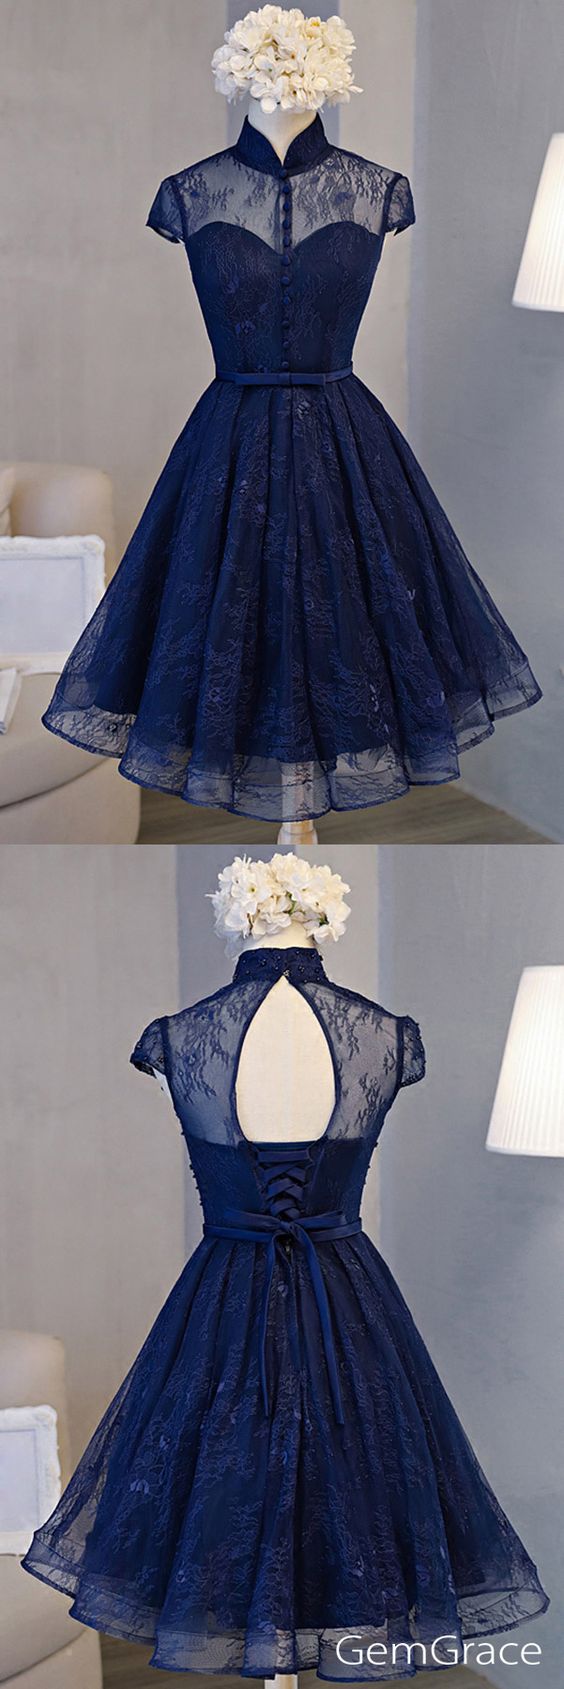 Blue Short Homecoming Dresses, Vintage A-line Knee-length Prom Dress ...